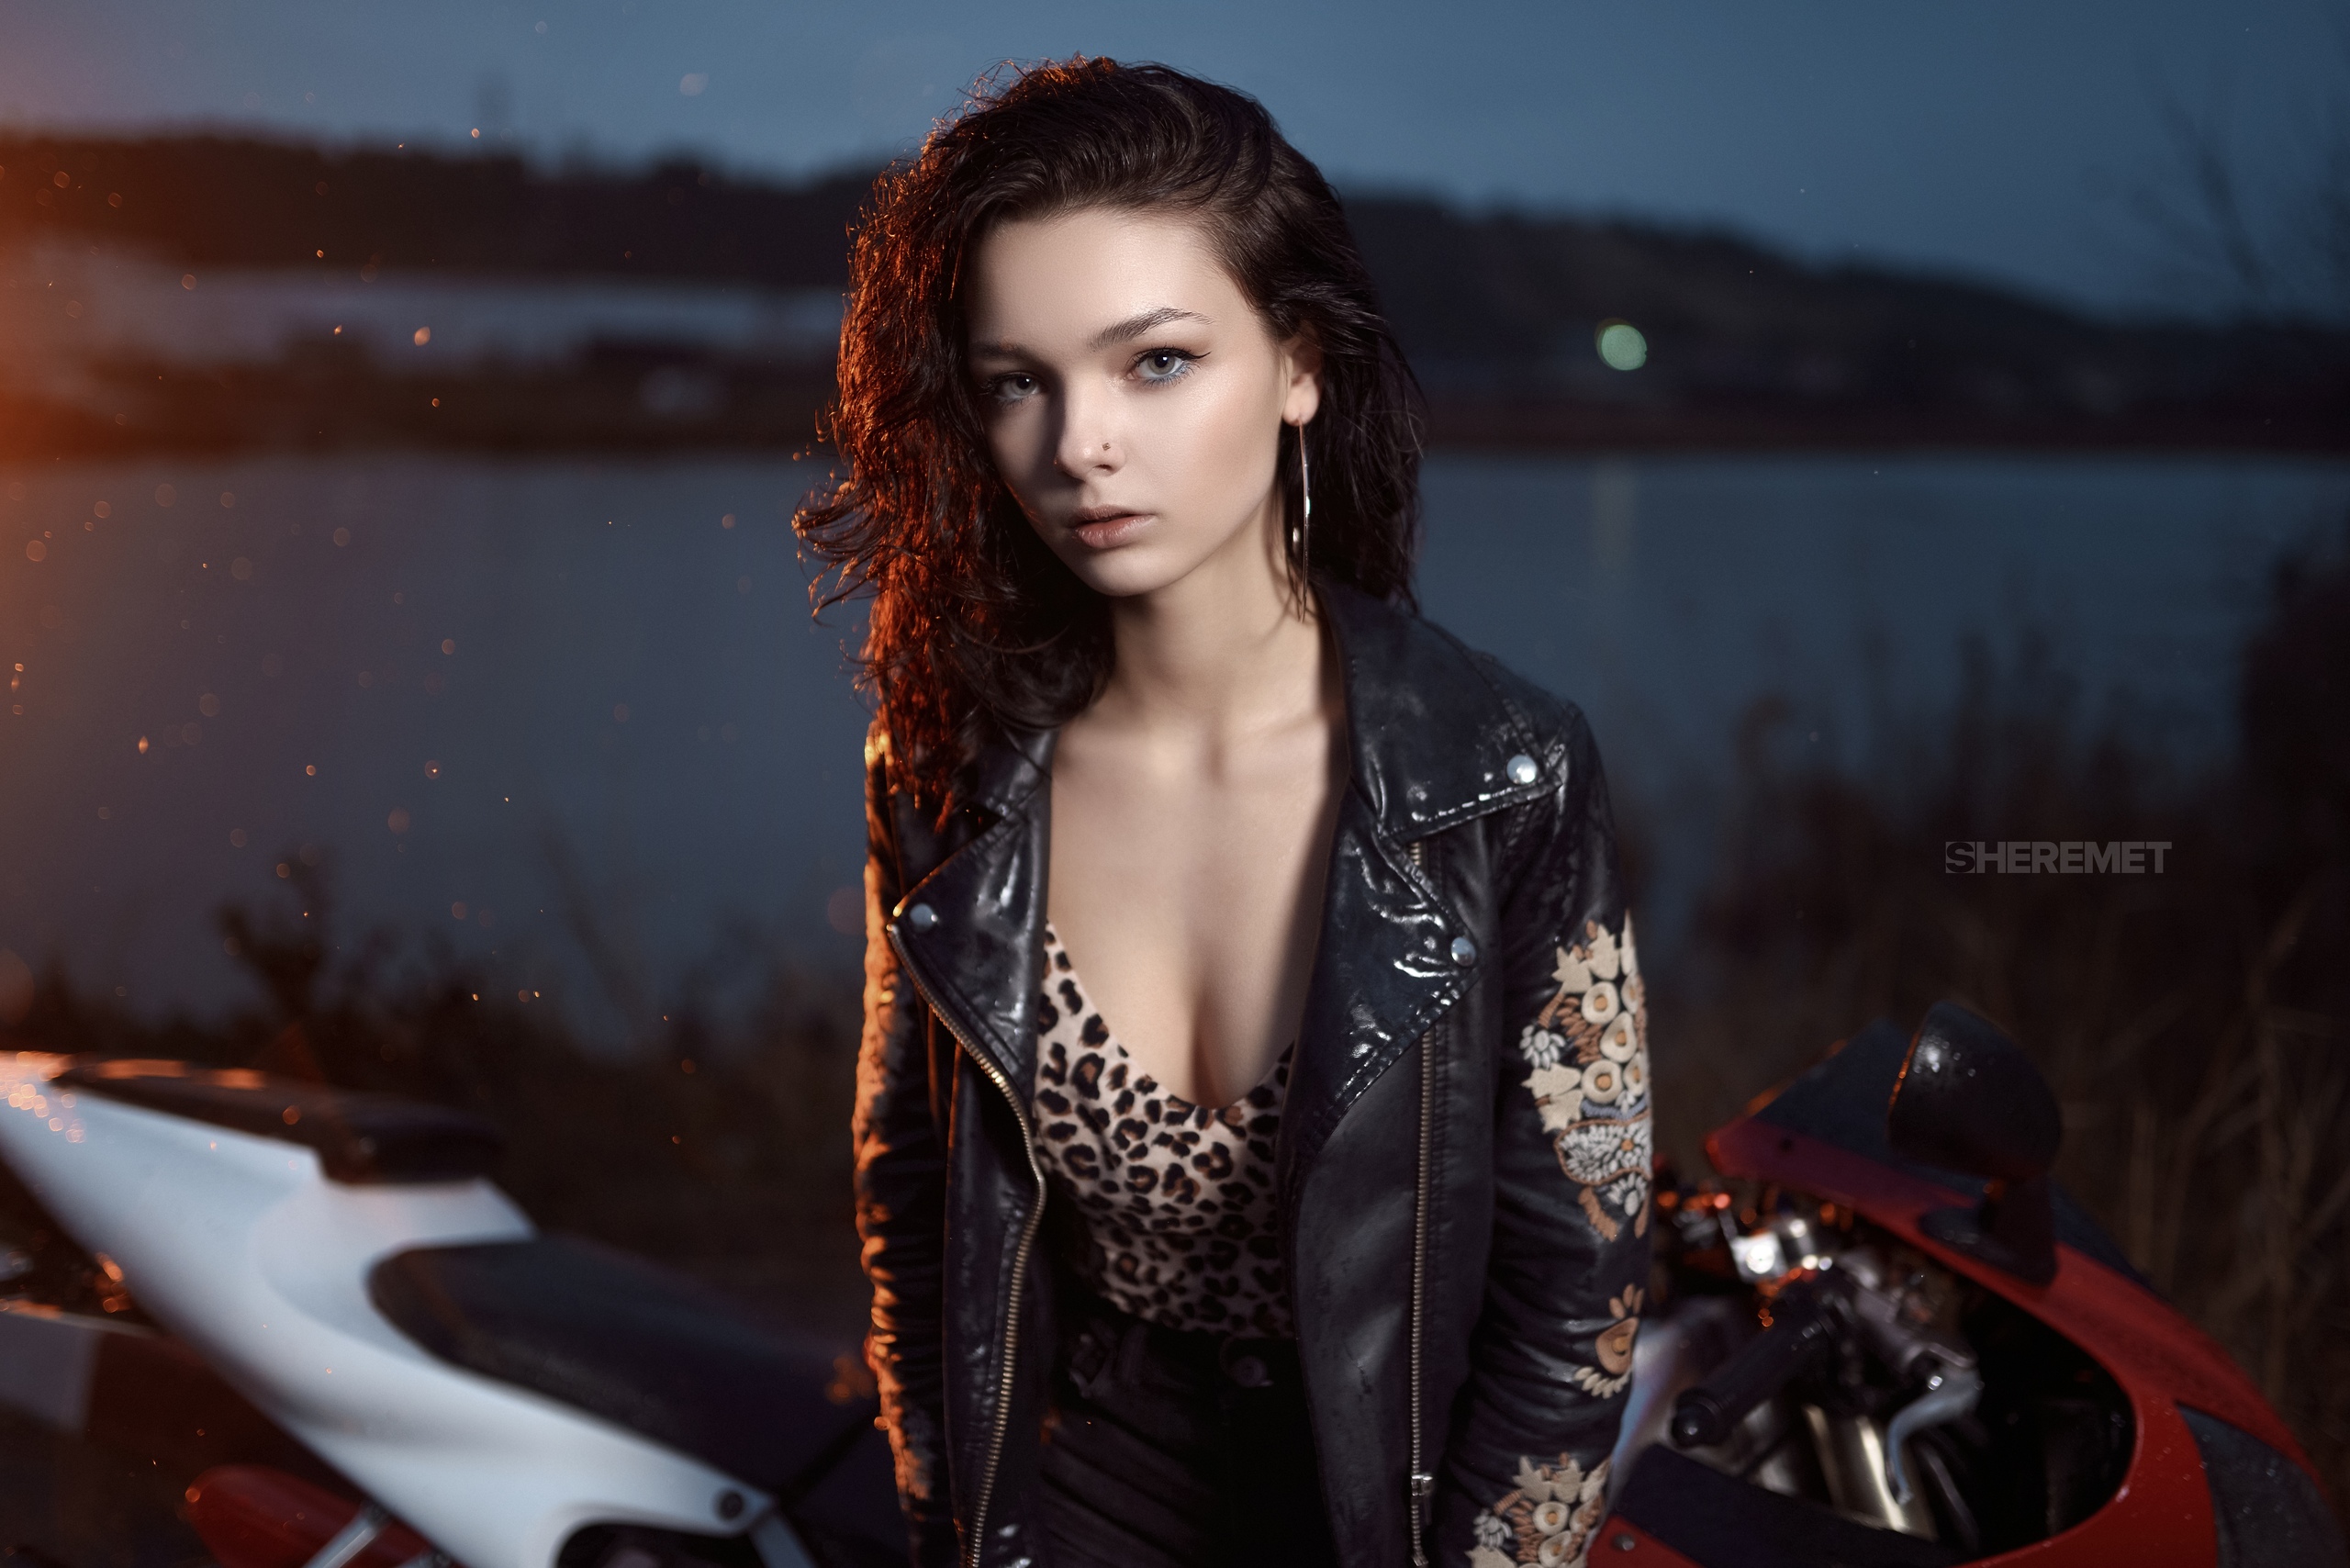 Women Ivan Sheremet Portrait Animal Print Leather Jackets Black Jackets Jeans Women With Motorcycles 2560x1708